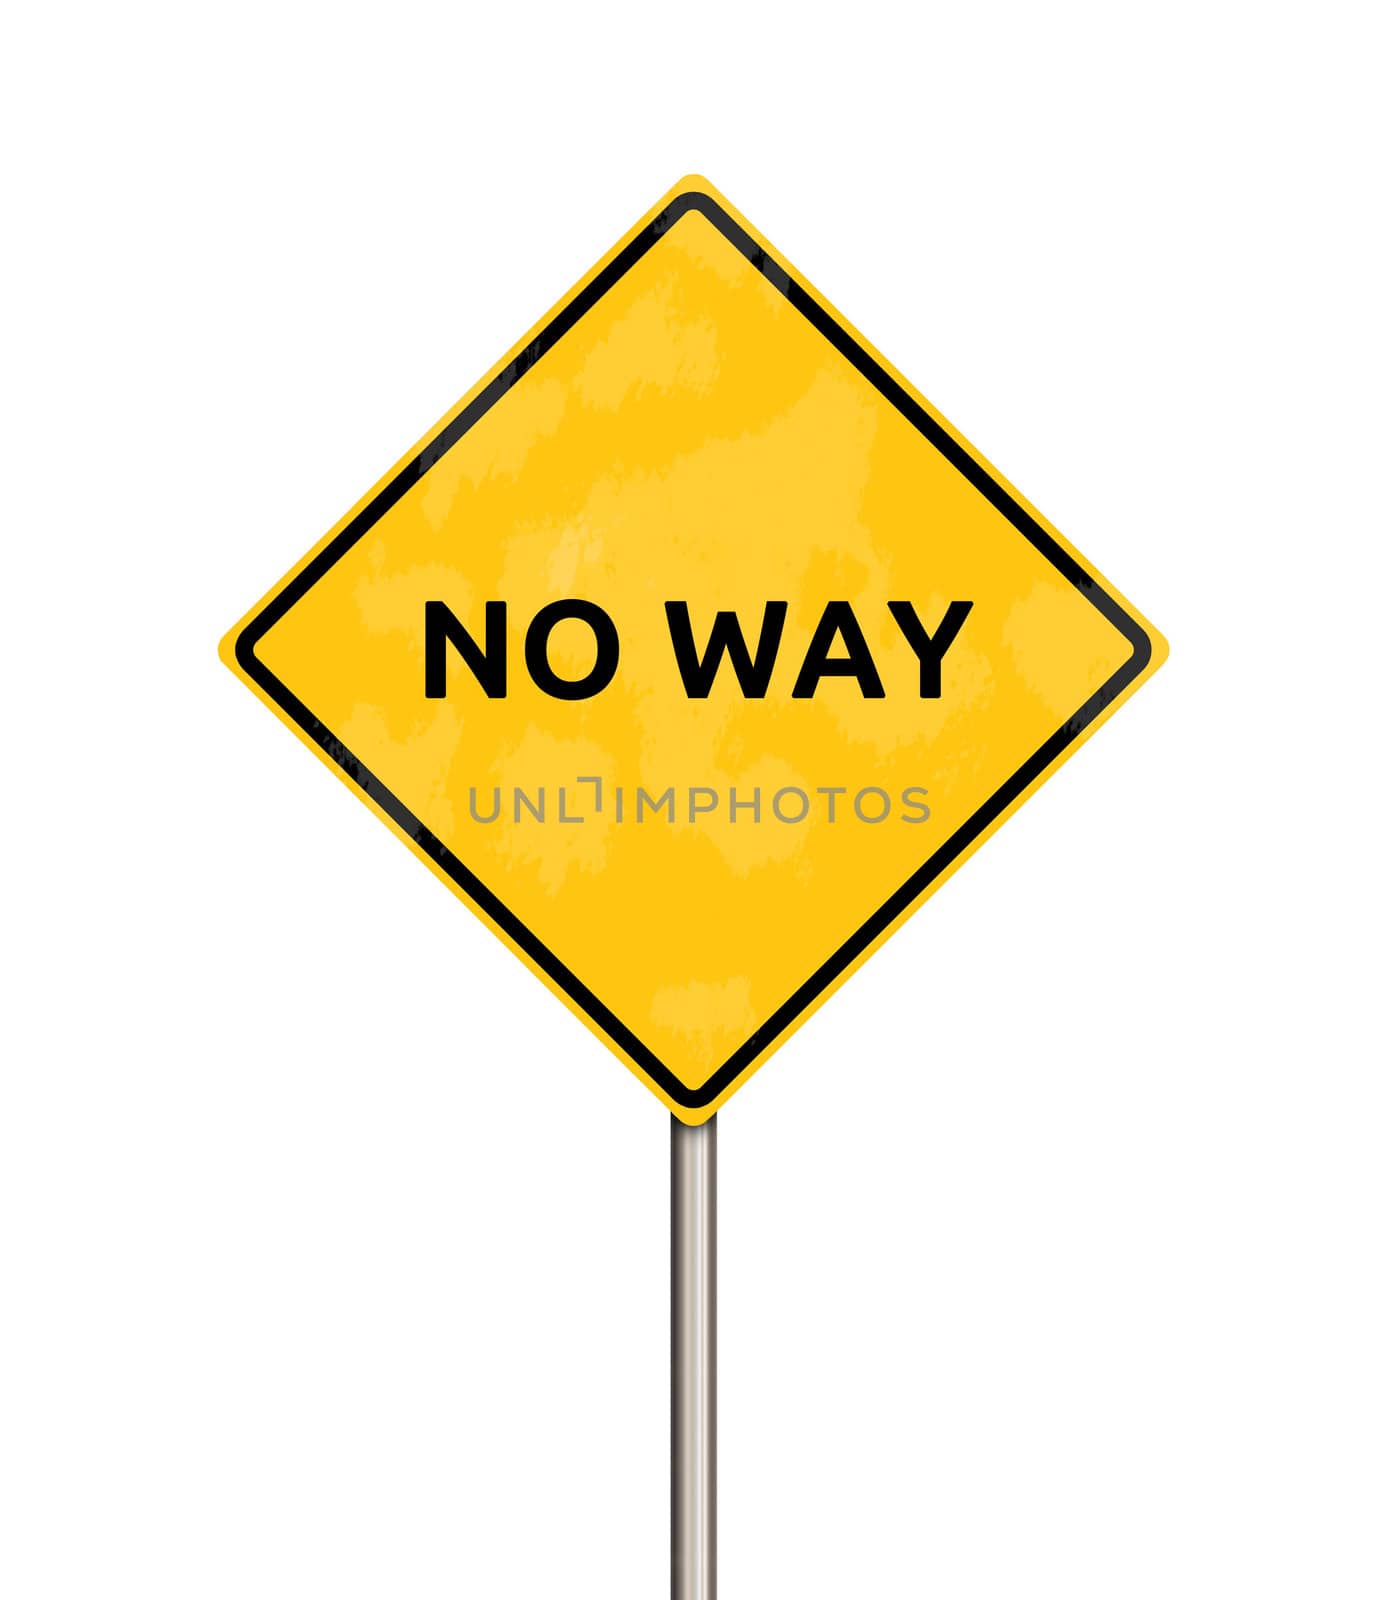 no way - sign by shutswis